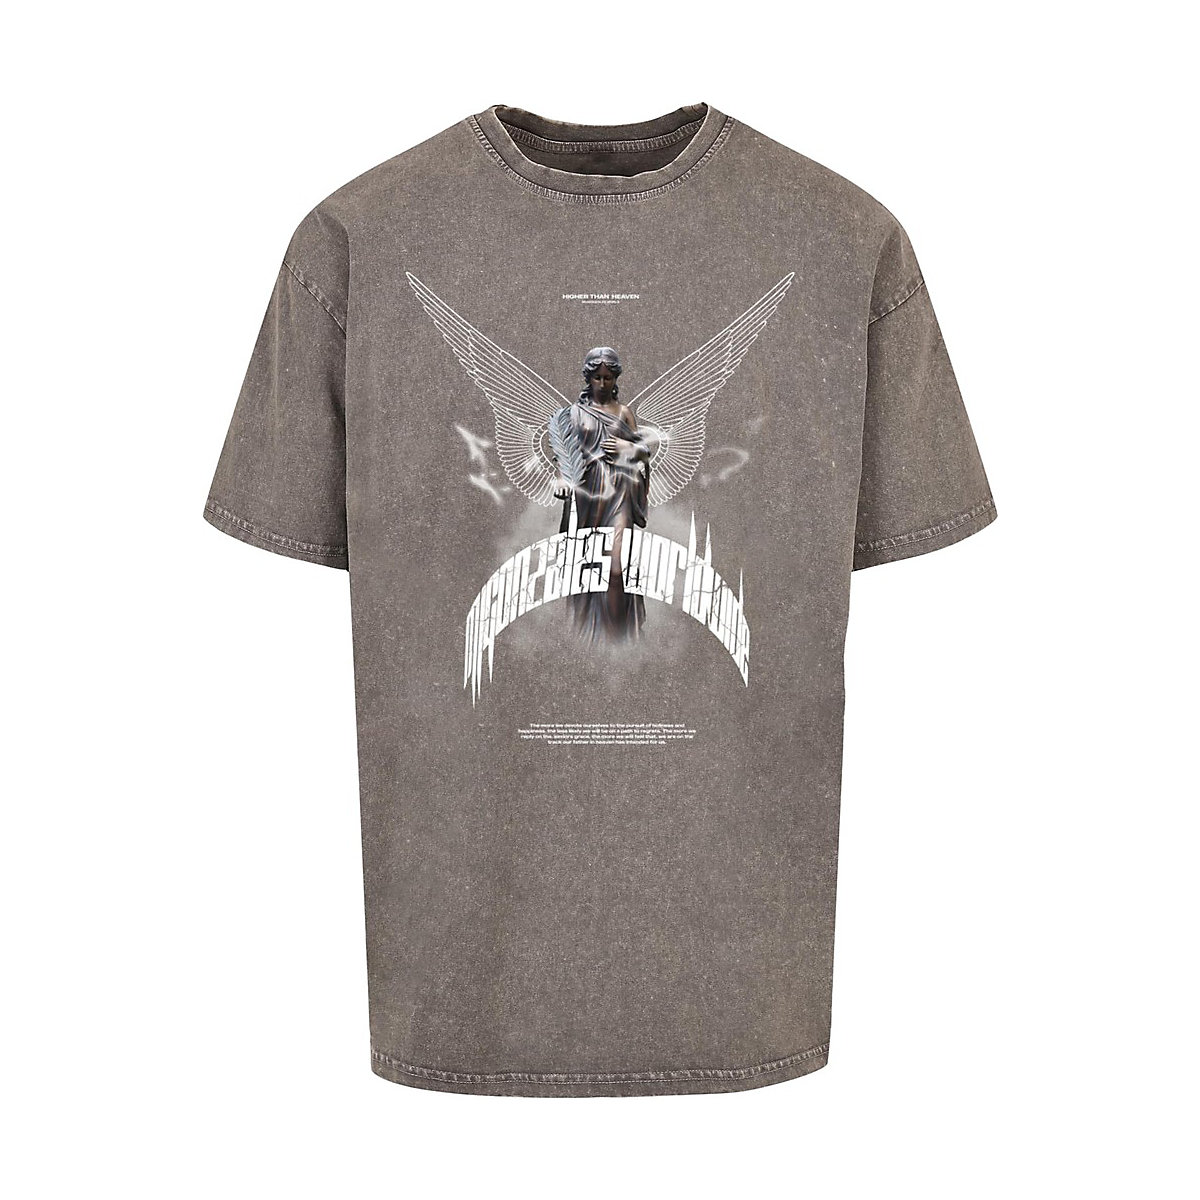 MJ Gonzales T-Shirt Higher Than Heaven V.1 Acid Washed Heavy Oversize Tee Black grau